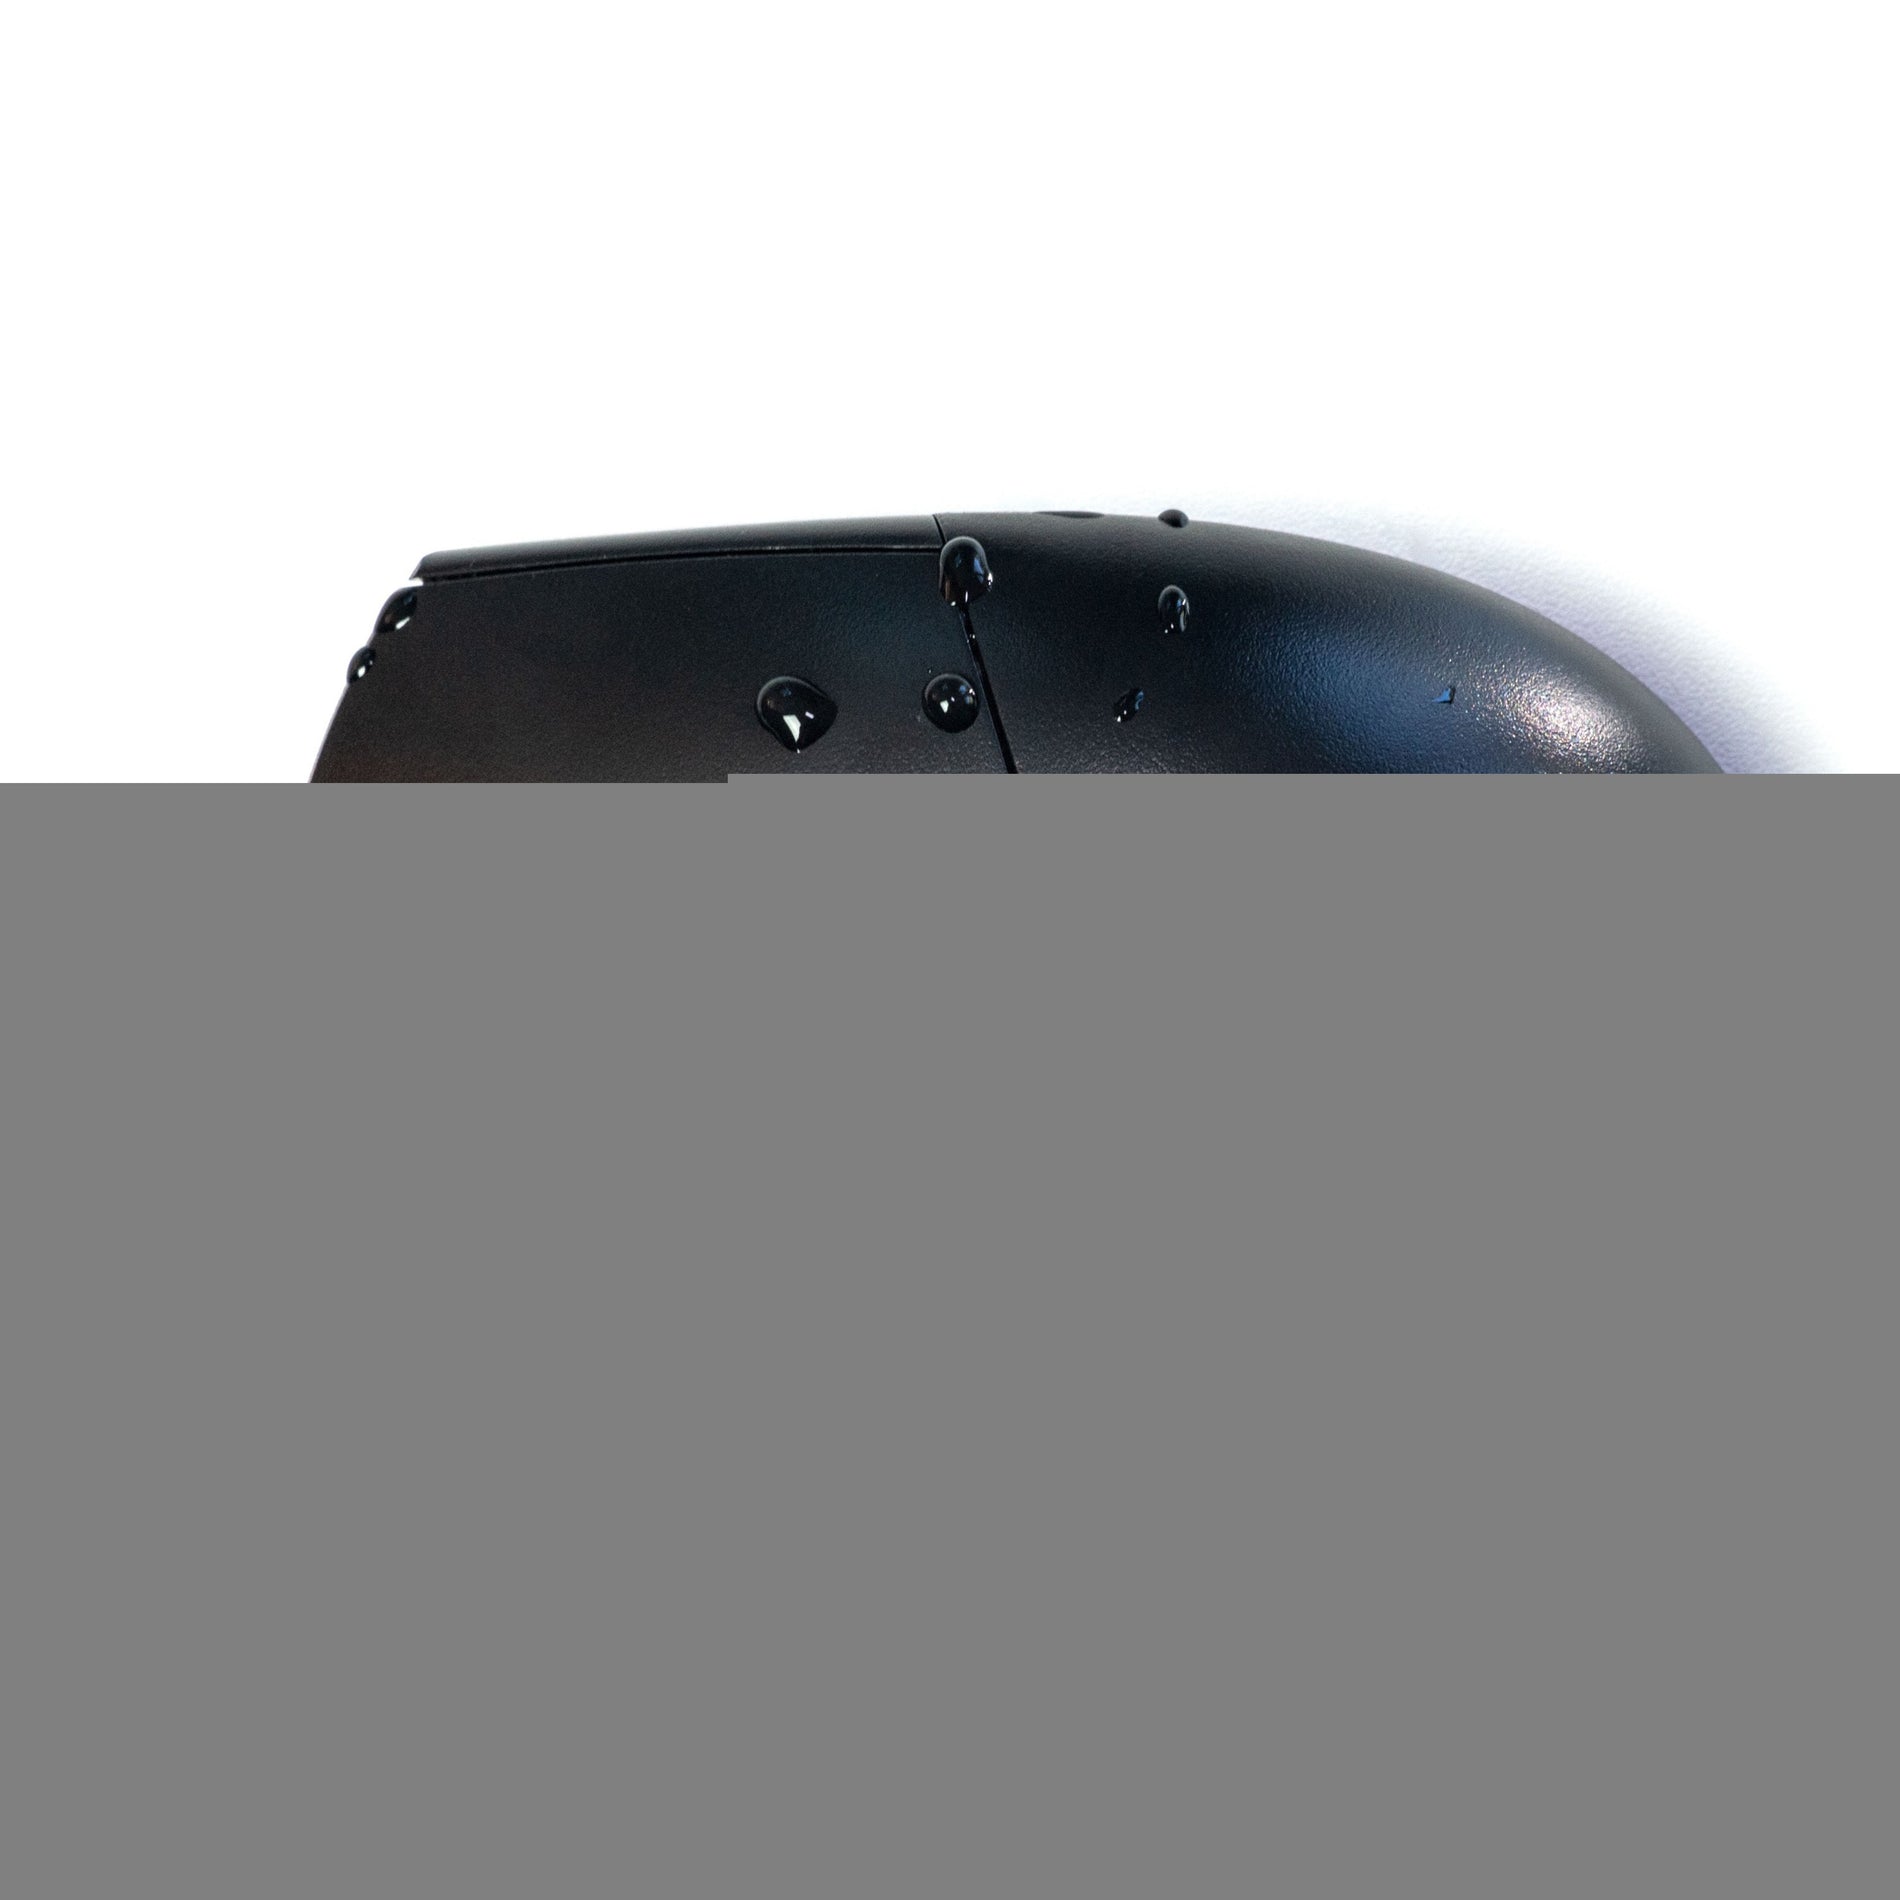 WetKeys Washable Keyboards OMWKABS04-BK Professional-grade Optical Waterproof Mouse with Scroll-wheel (USB) (Black), Water Resistant, RoHS & WEEE Certified